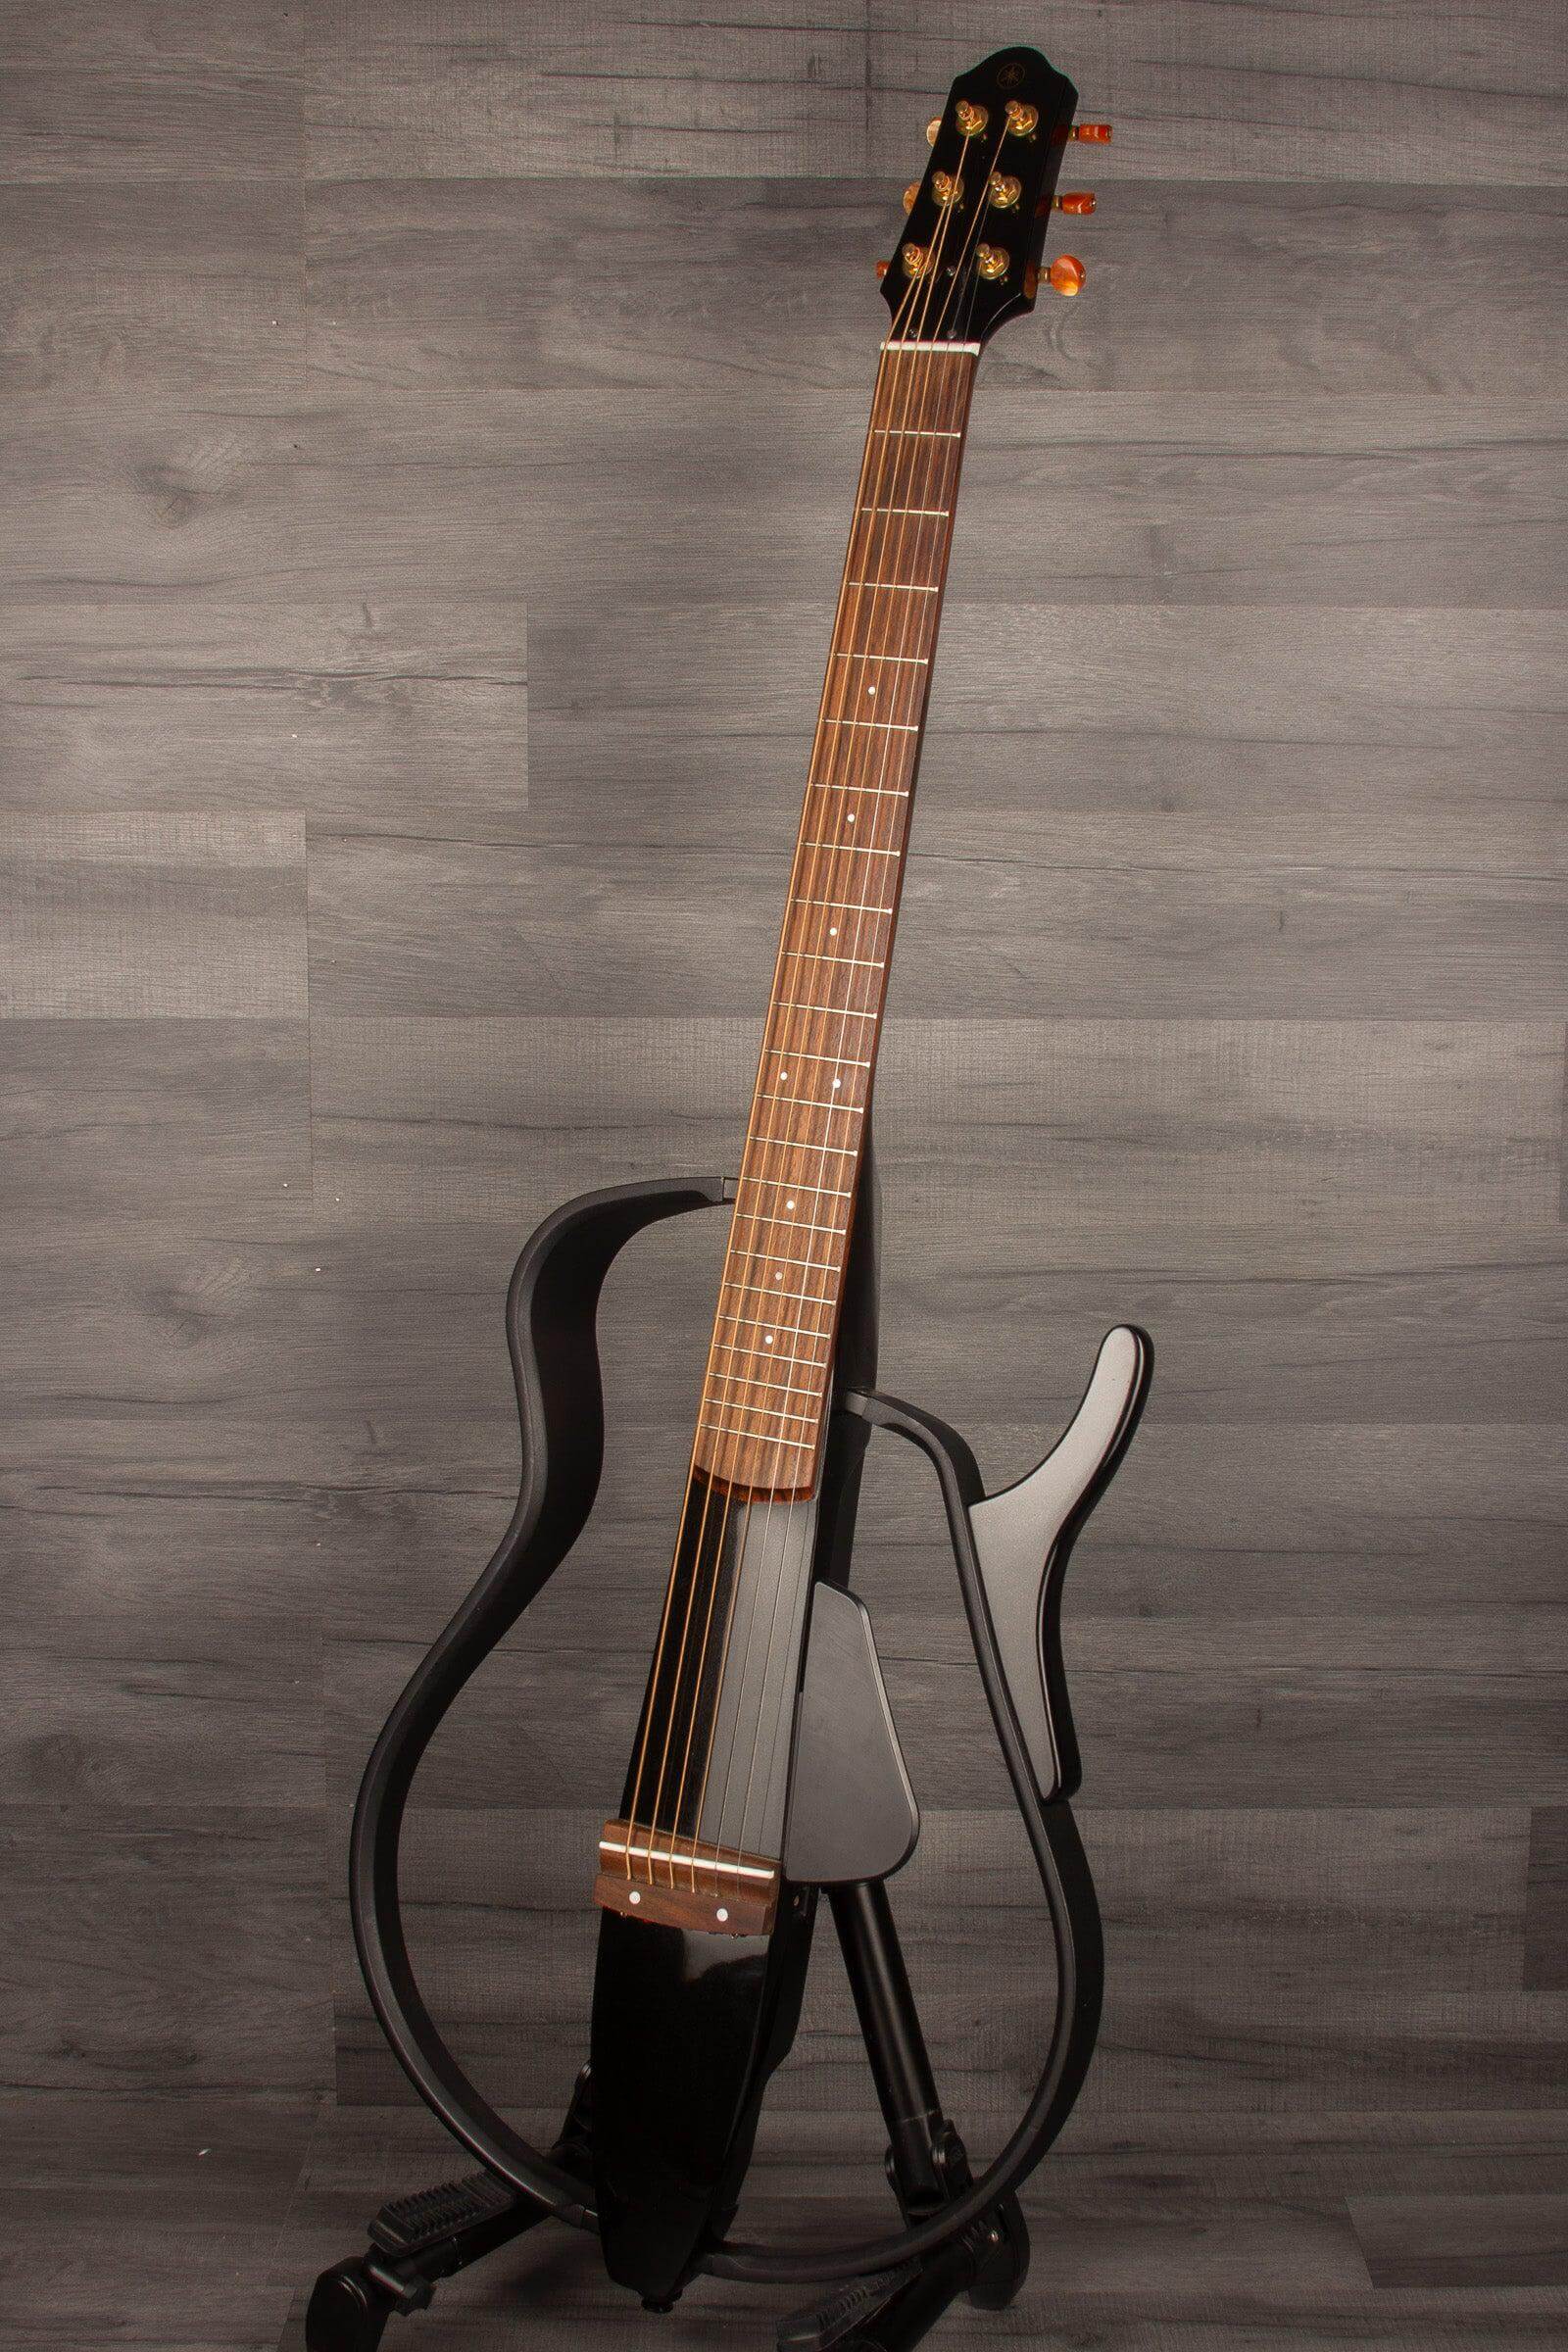 USED - Yamaha SLG110S Silent Guitar Steel - Black | Musicstreet guitar